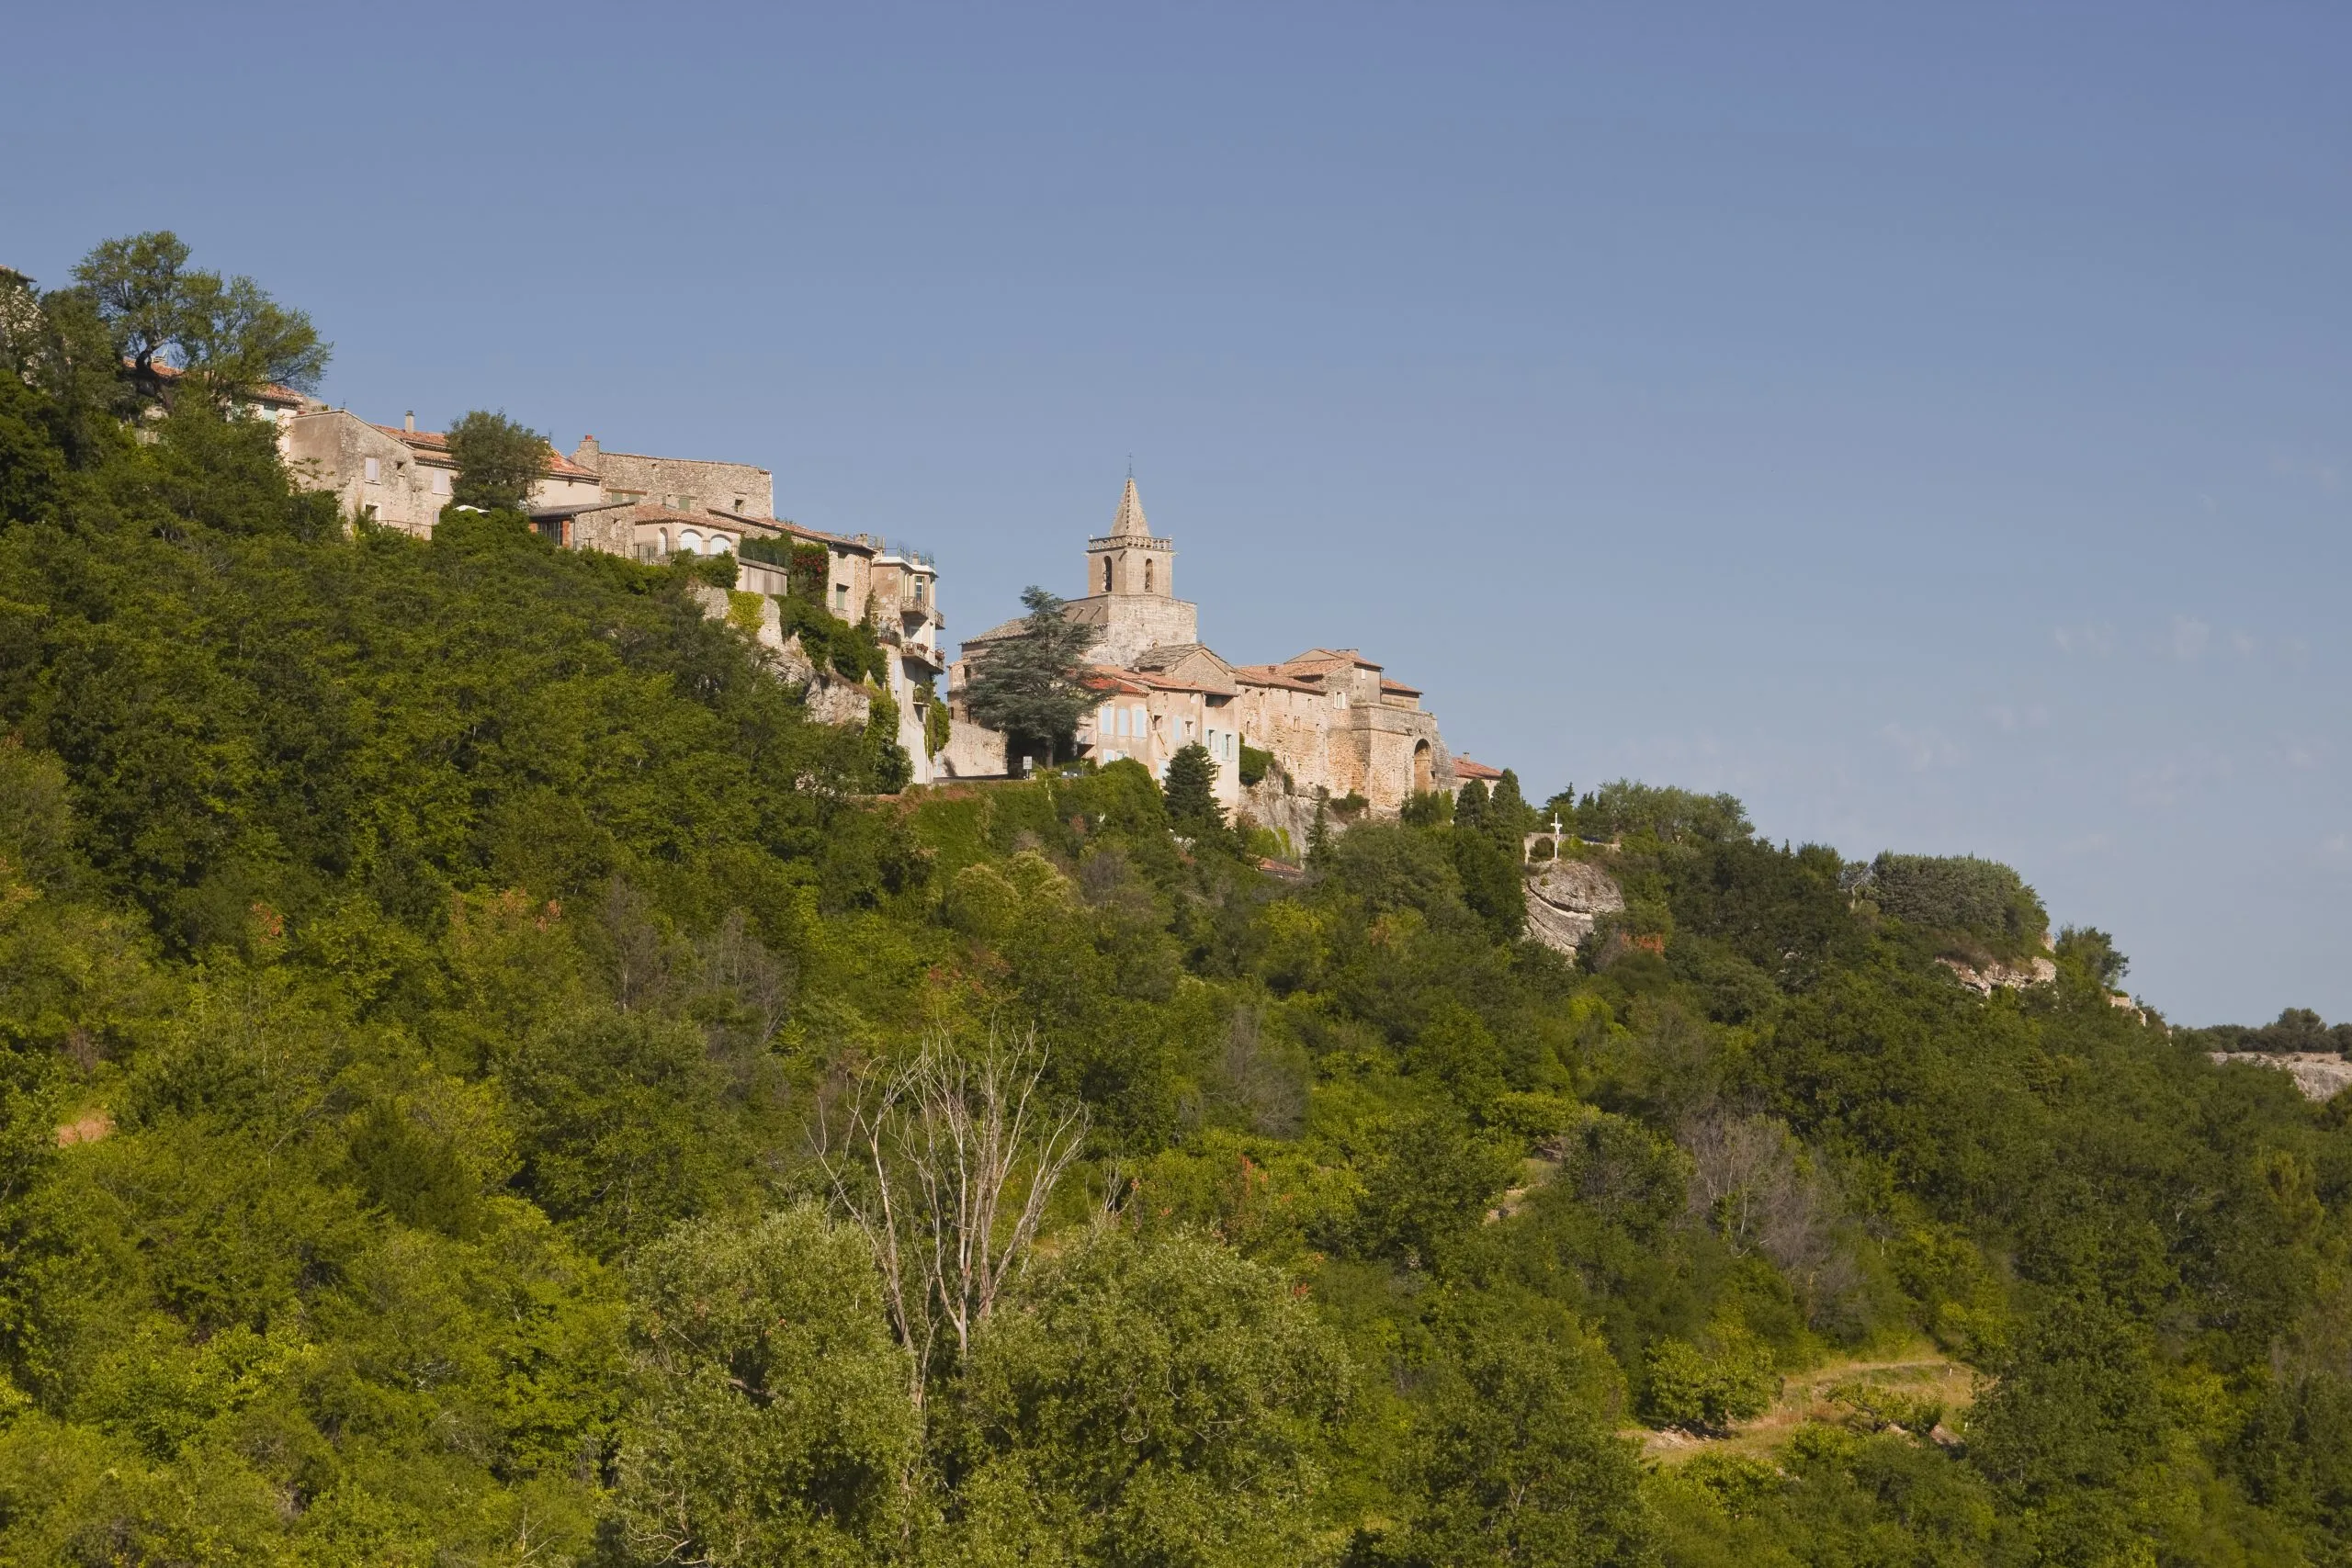 The hilltop village of Venasque in ProvenceThe hilltop village of Venasque in Provence